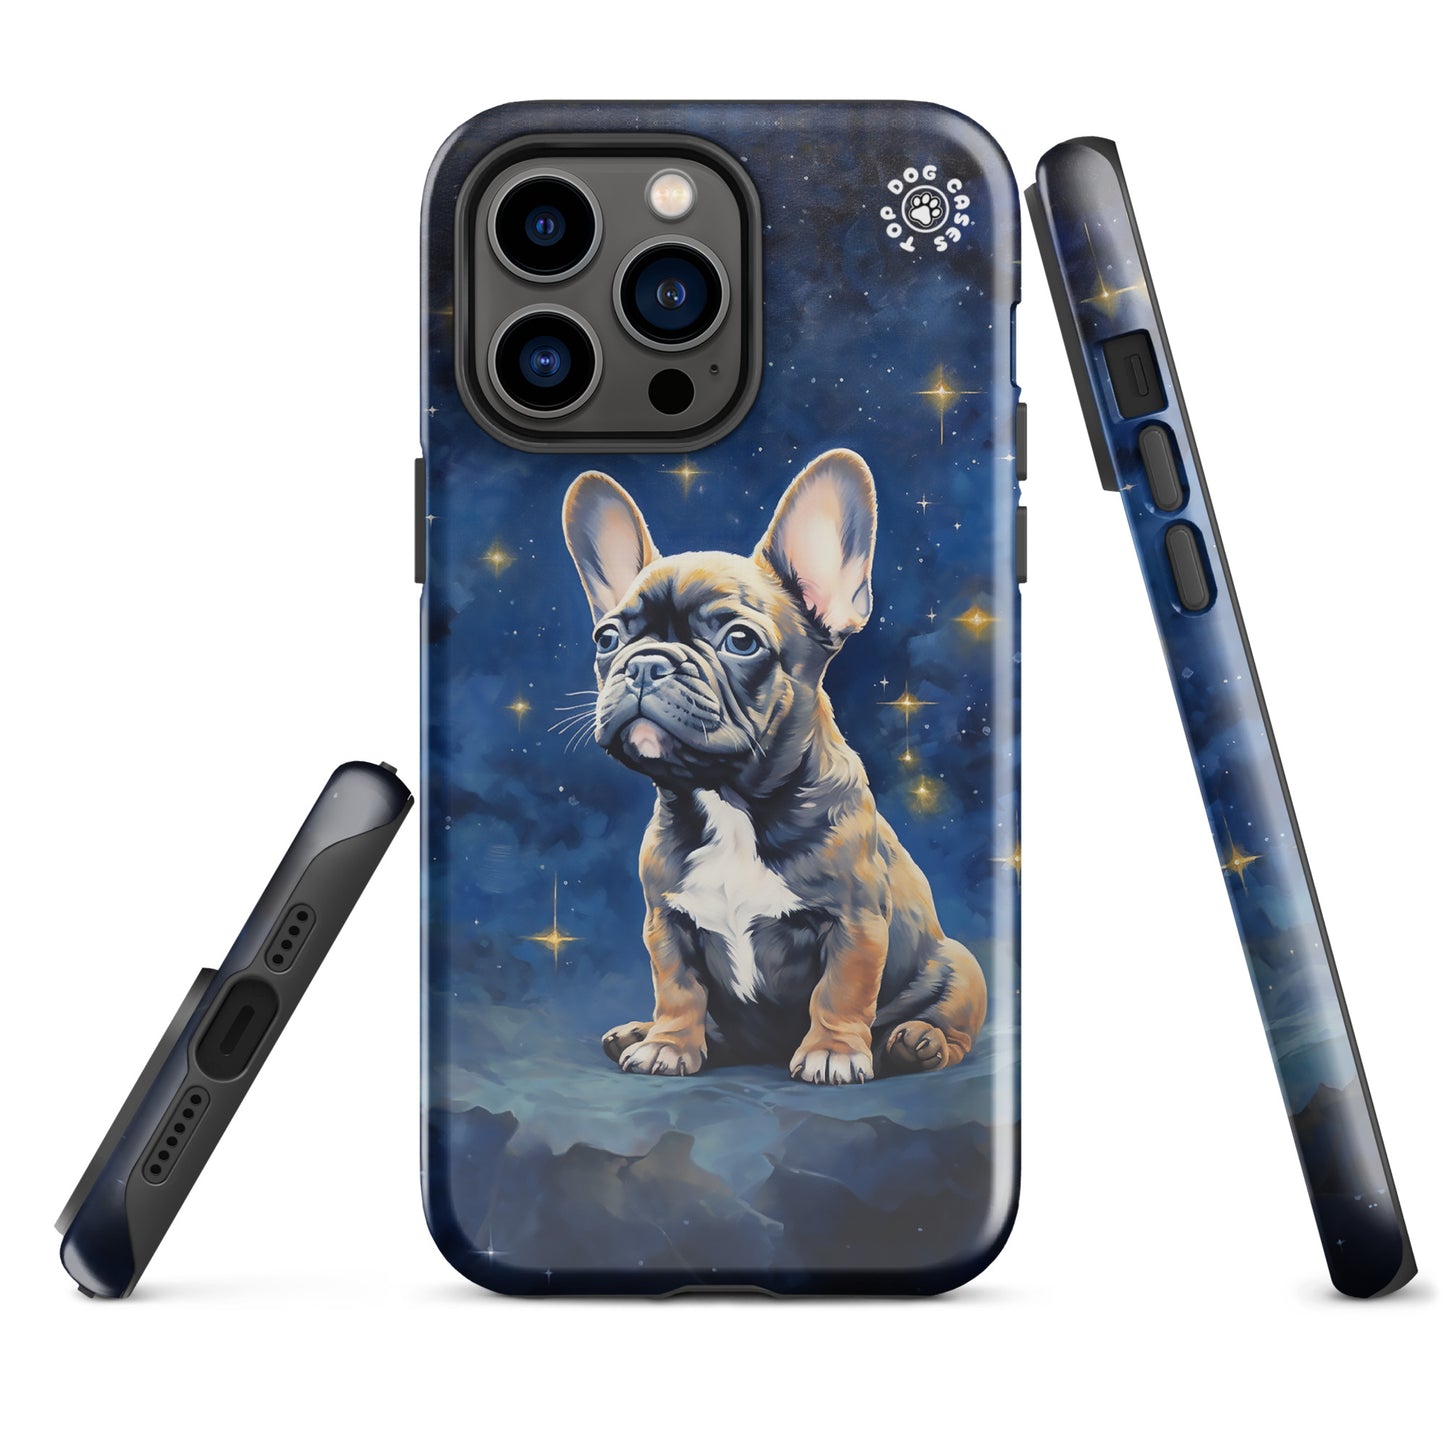 French Bulldog - iPhone Case - Cute Phone Cases